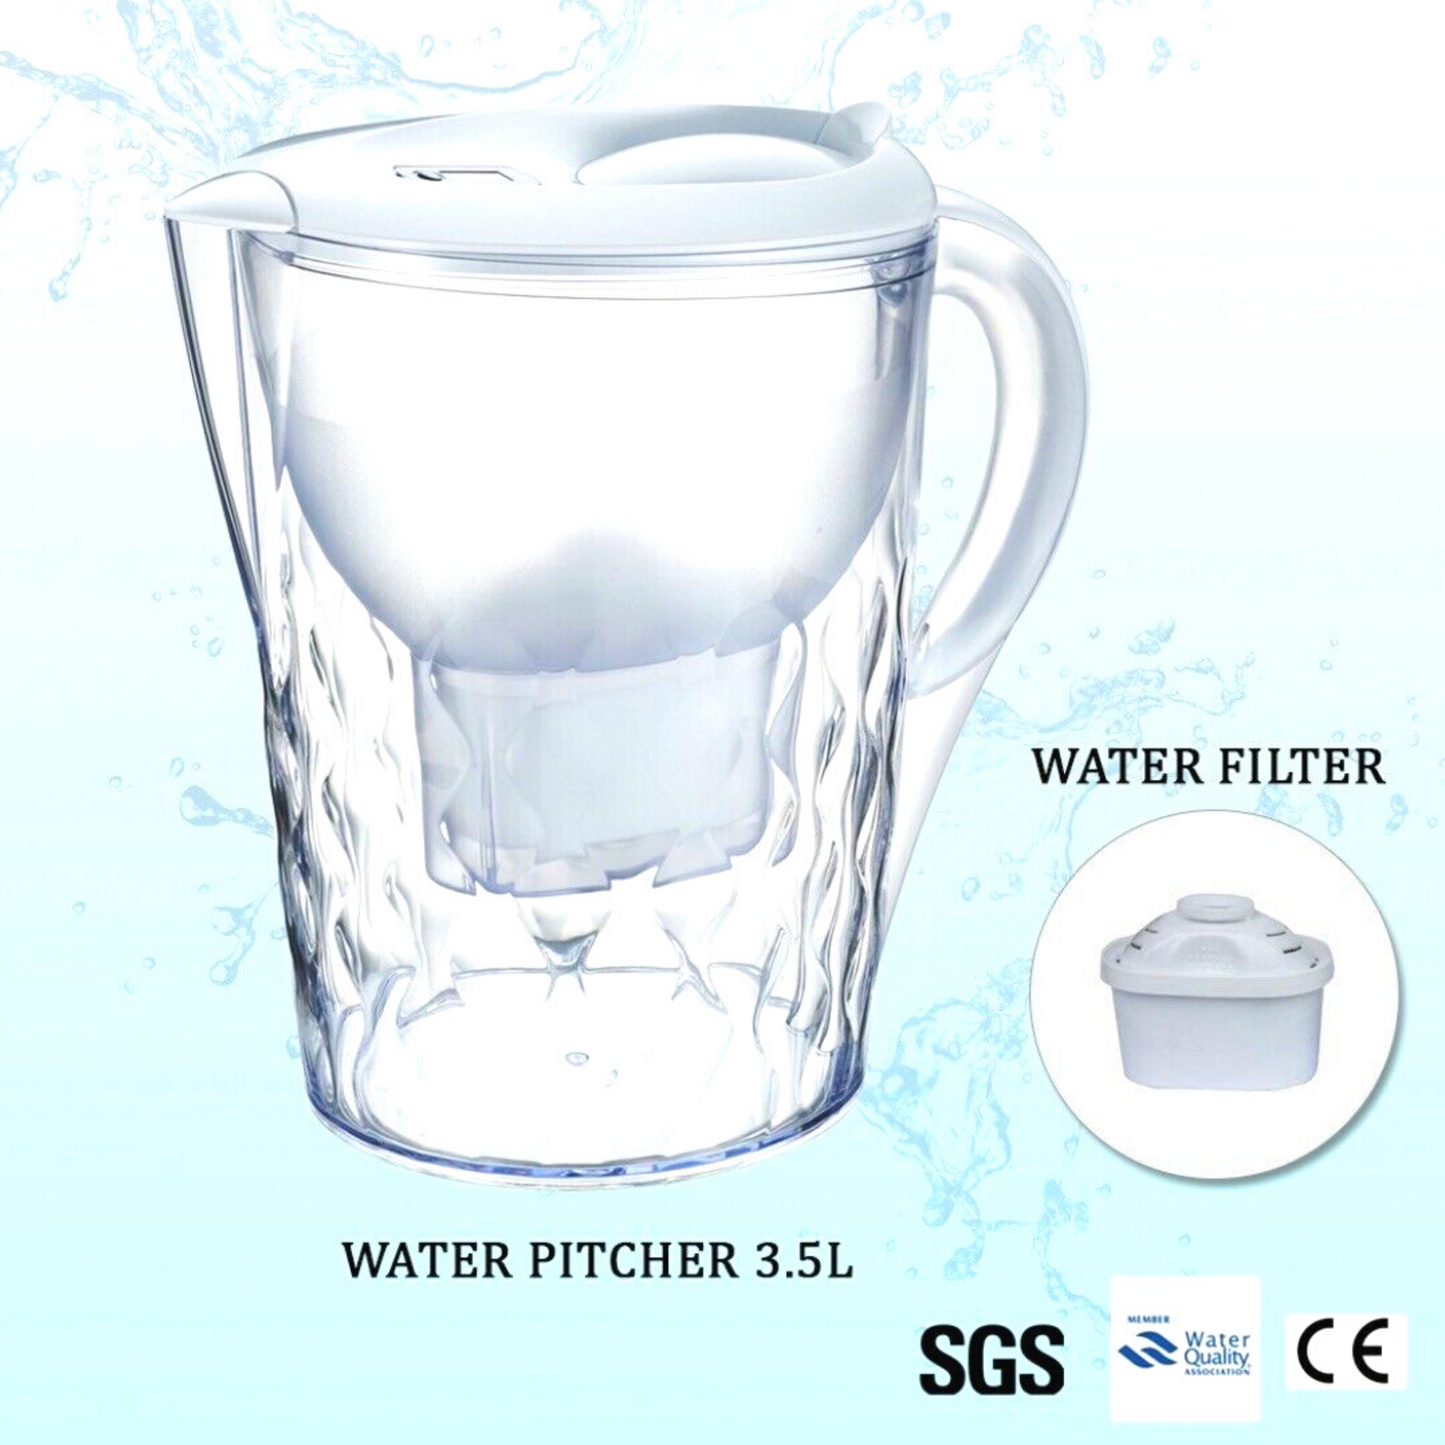 Water Filter Jug 3.5L Pitcher- White